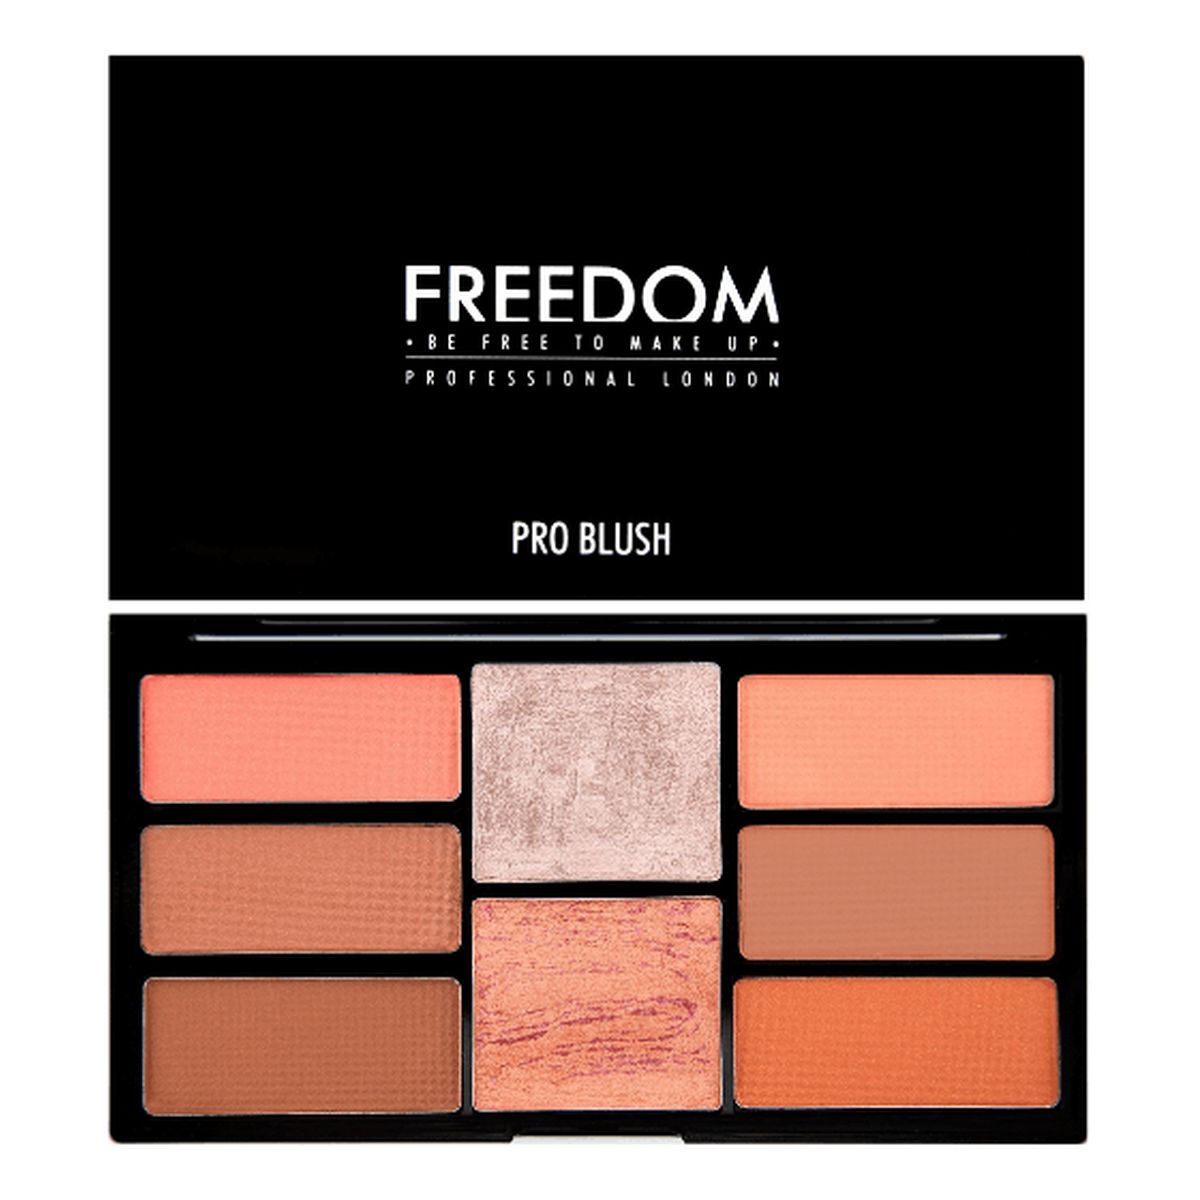 Freedom Makeup Pro Blush Palette Peach and Baked Zestaw do konturowania twarzy 15g